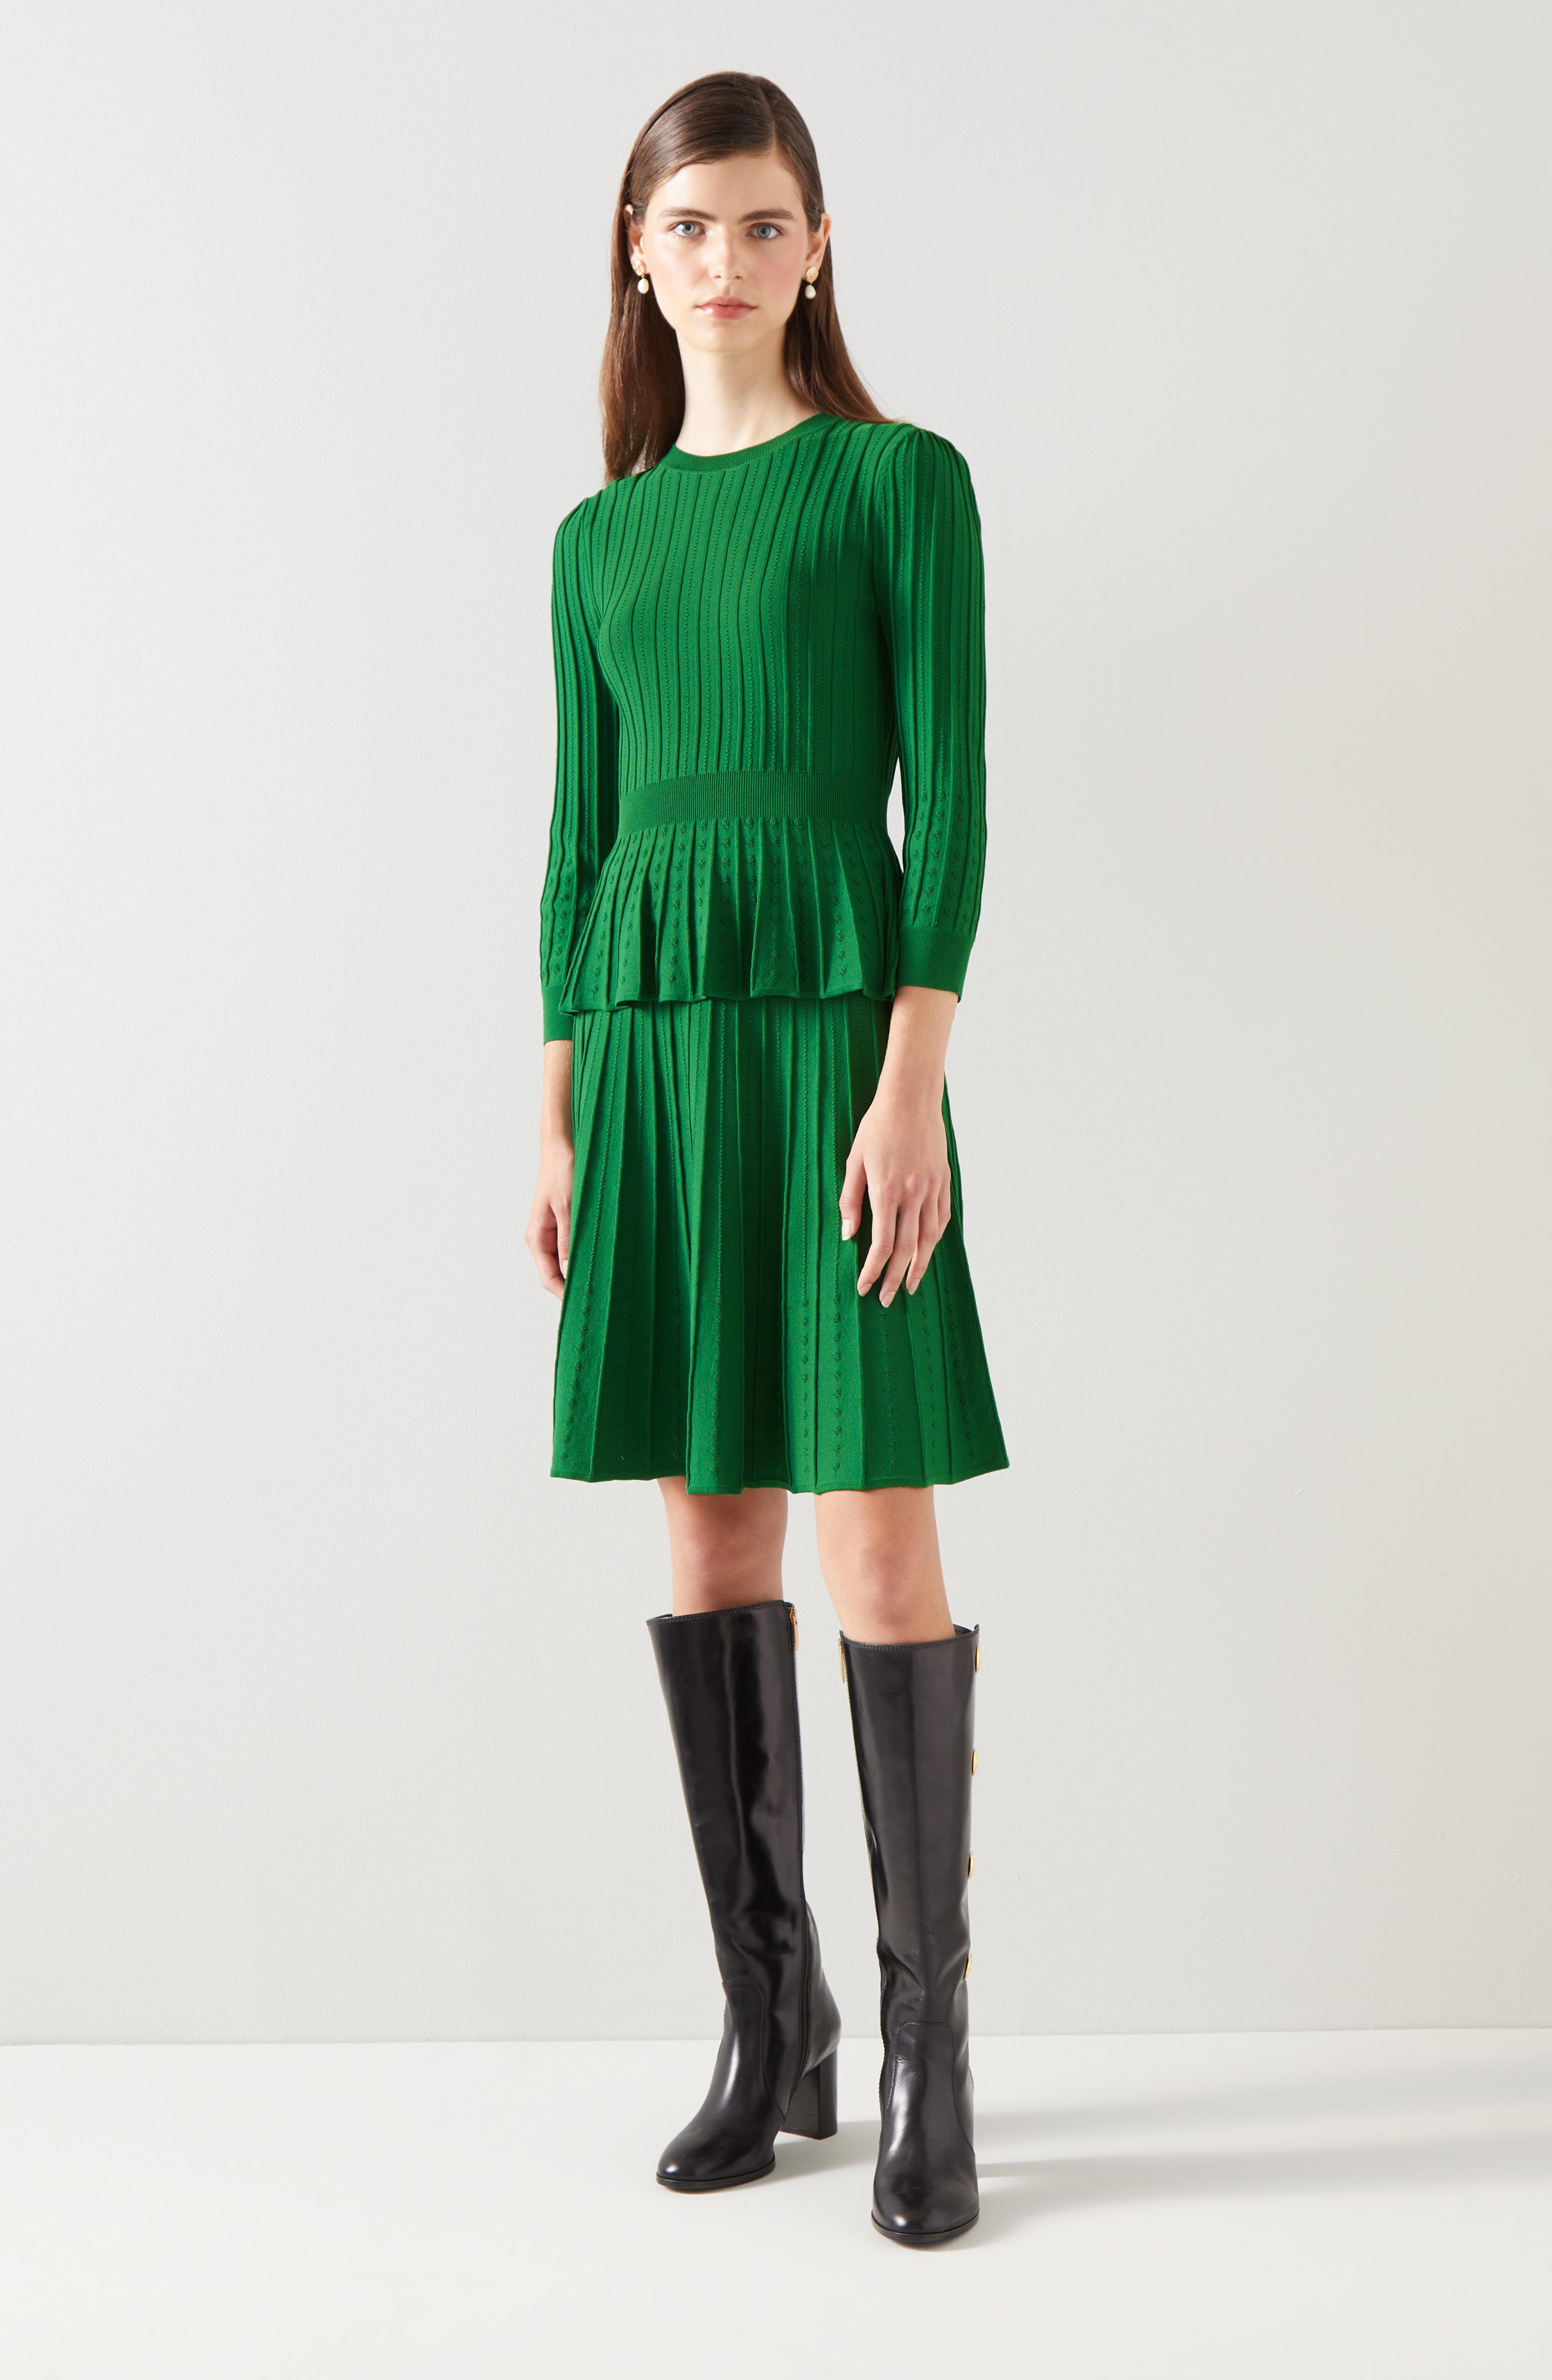 L.K.Bennett Susannah Green Rib Knit Pleated Skirt, Dark Green